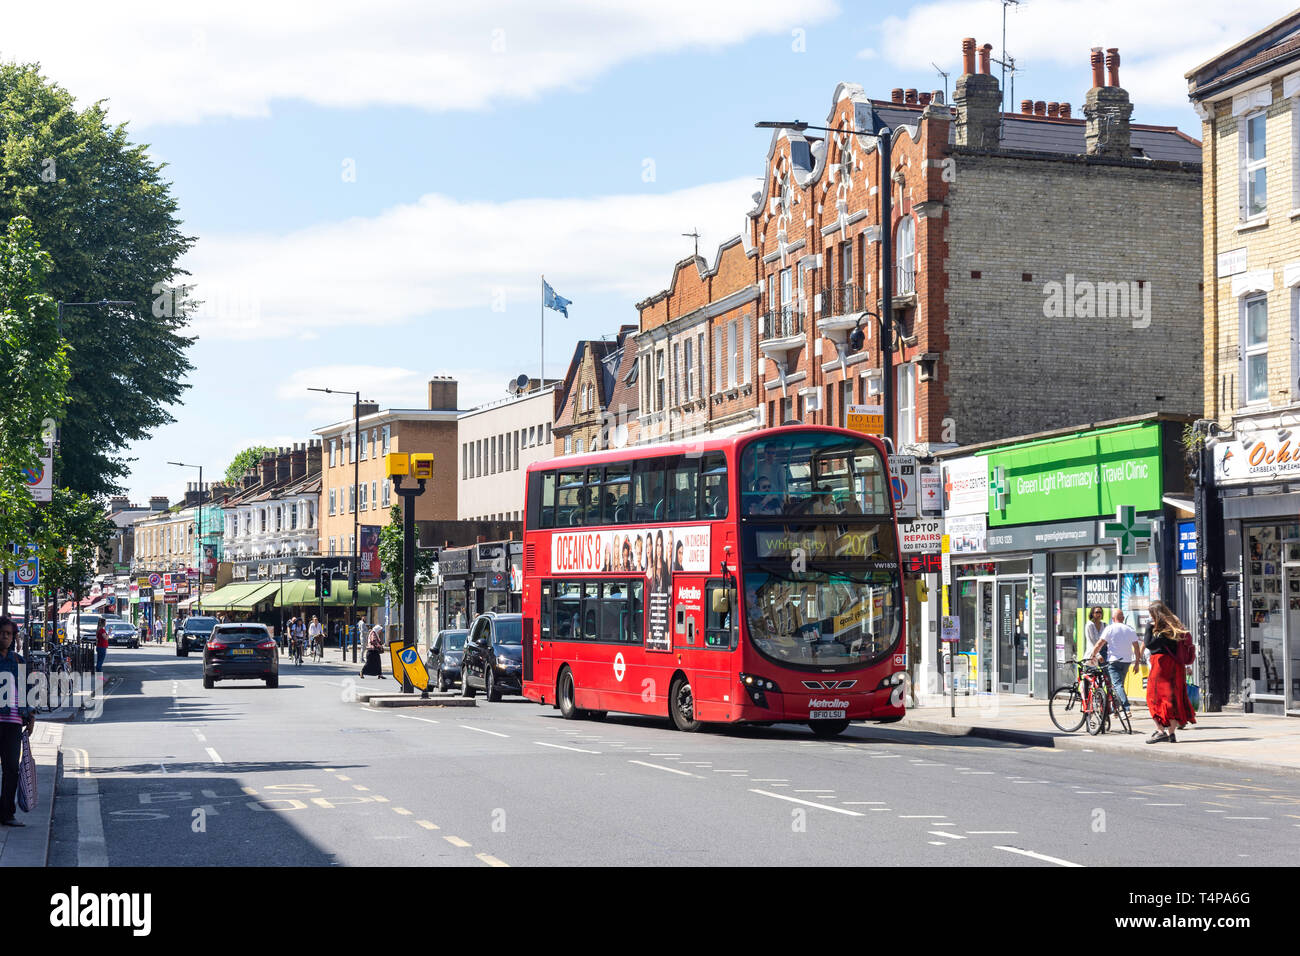 Uxbridge Road, Shepherd's Bush, London Borough of Hammersmith et Fulham, Greater London, Angleterre, Royaume-Uni Banque D'Images